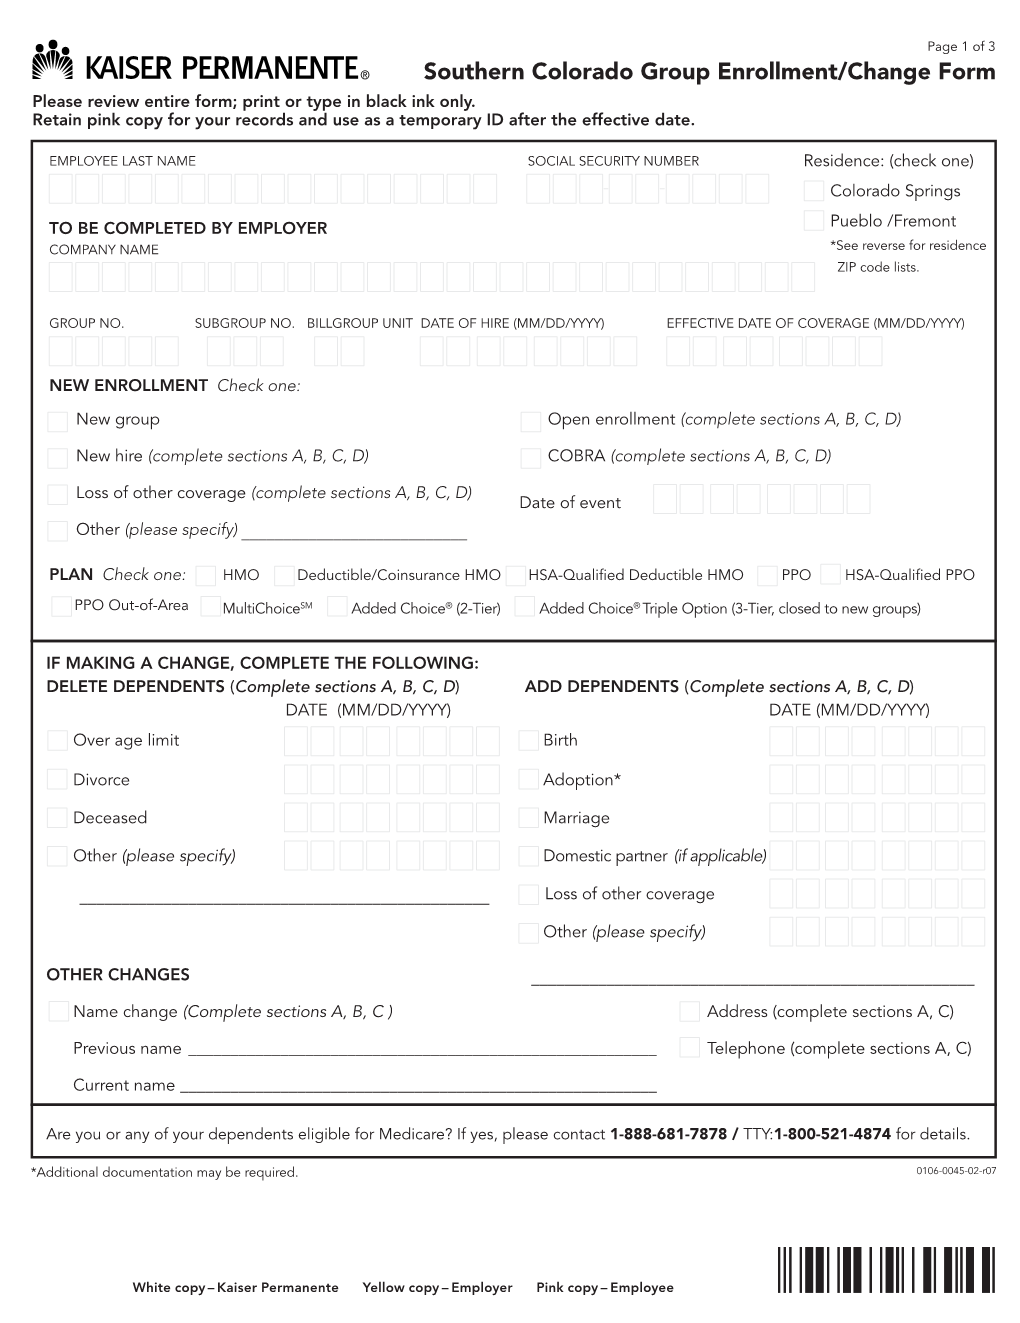 Southern Colorado Enrollment Change Form (Effective 07-09)